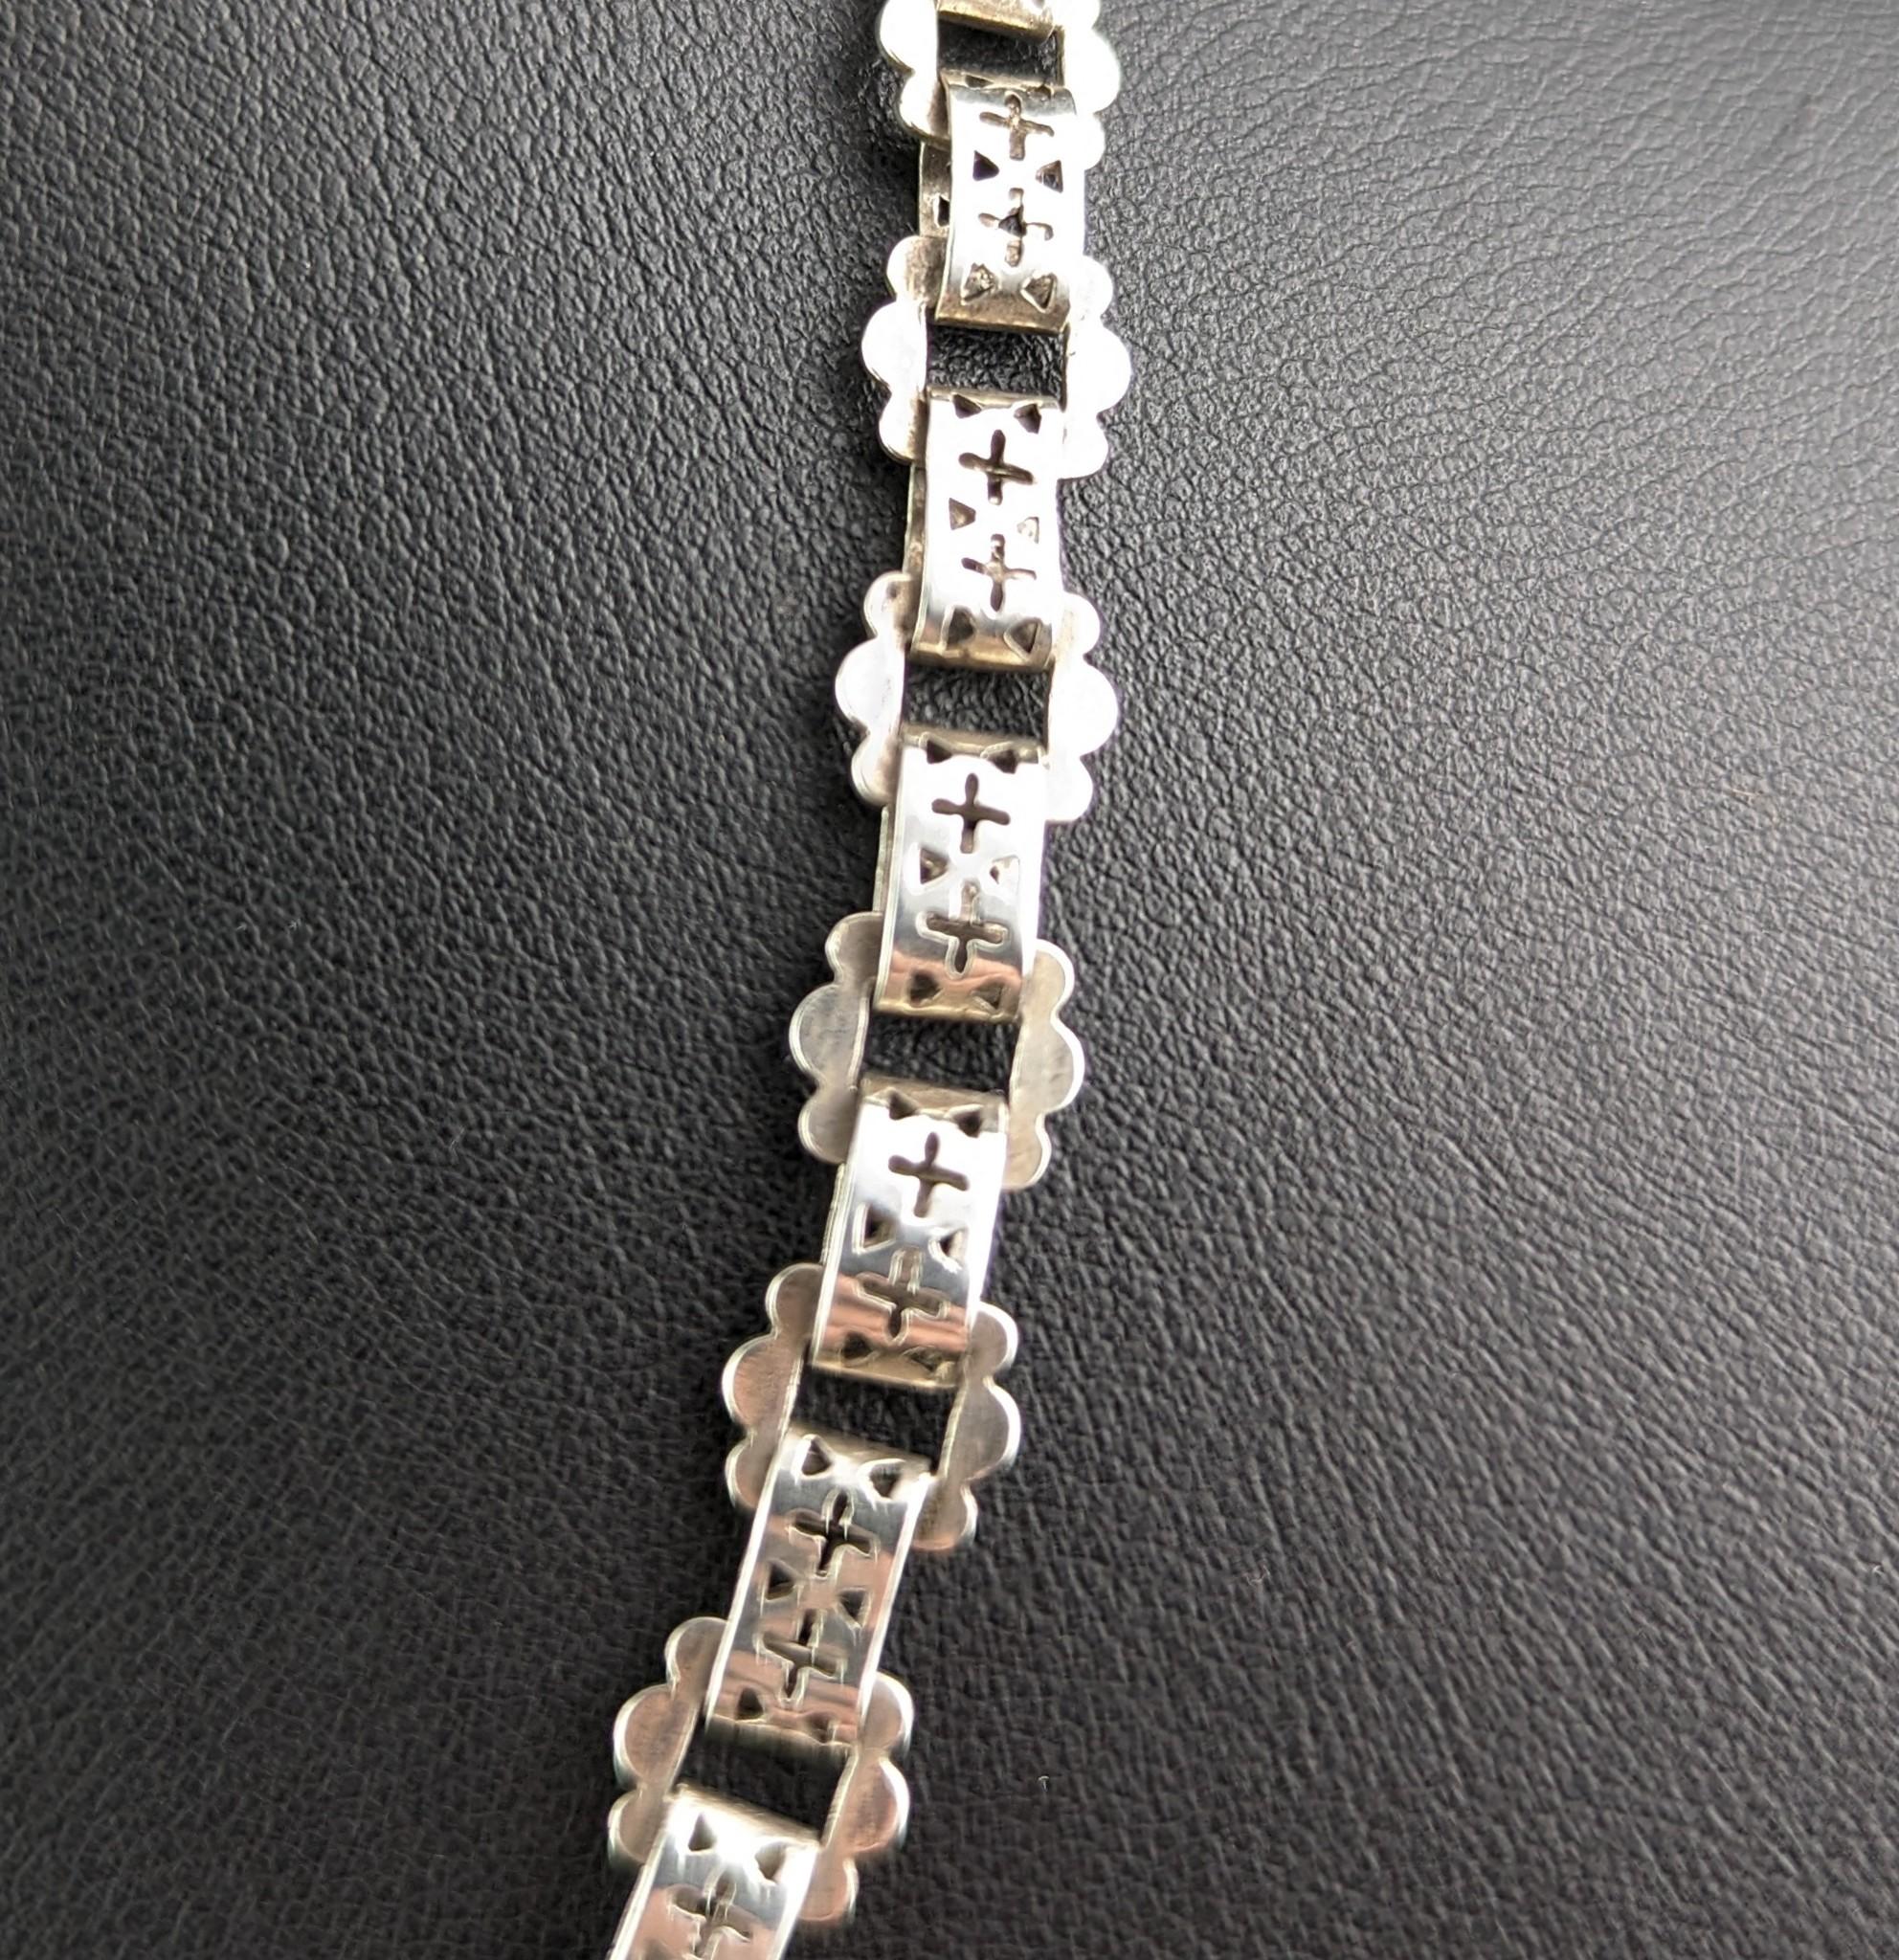 Antique Silver Book Chain Necklace, Victorian Collar 5